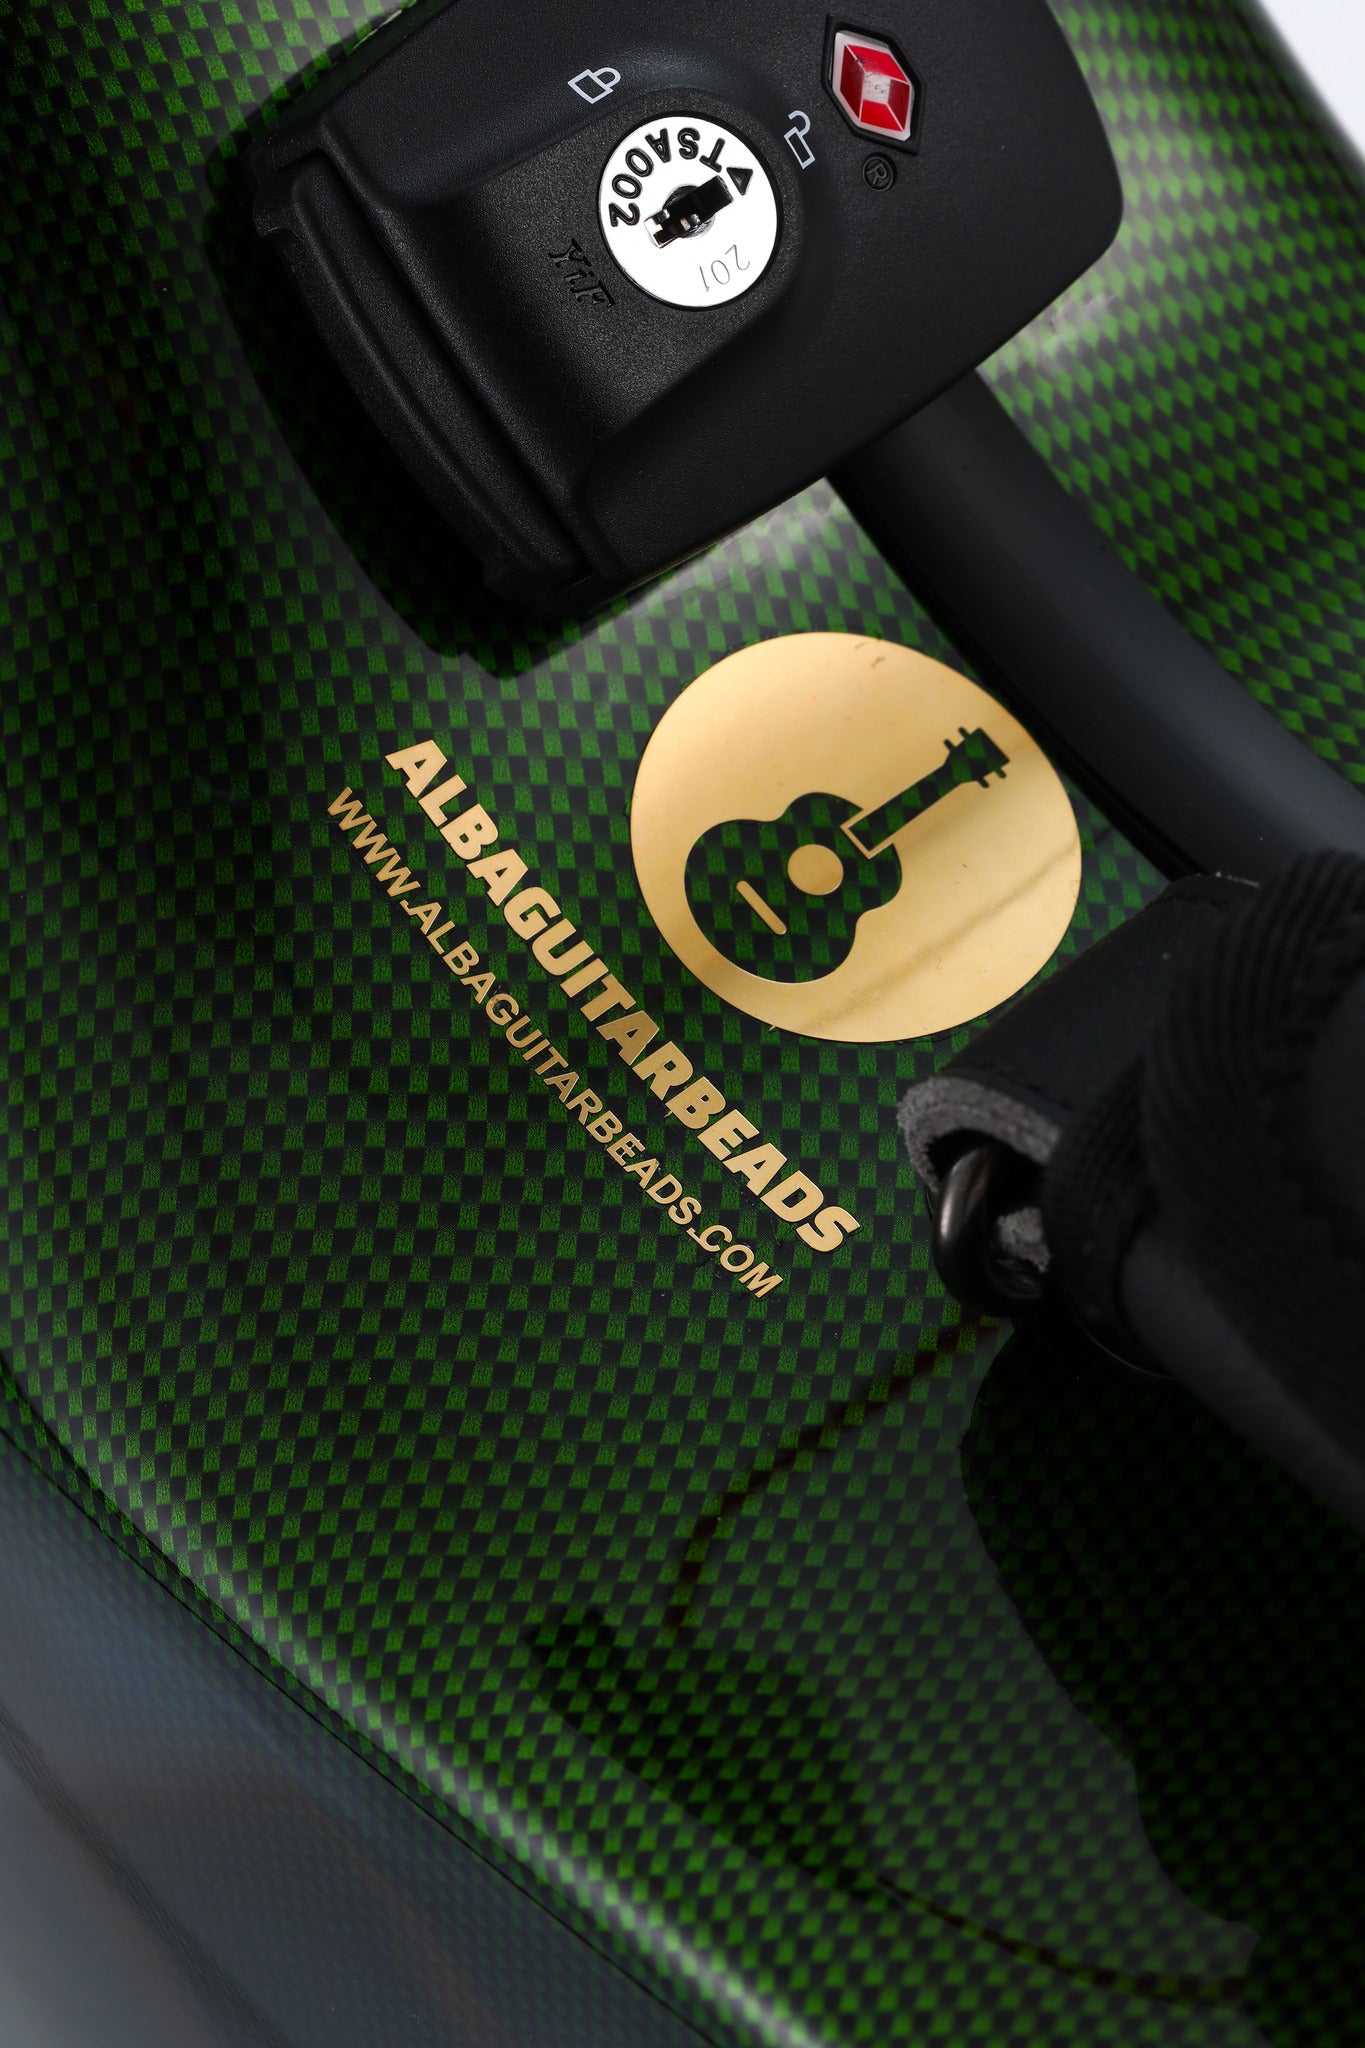 Alba Guitar Beads Case Green Carbon Pattern Gloss para Guitarra Clásica Acústica, Estuche para guitarra flamenca